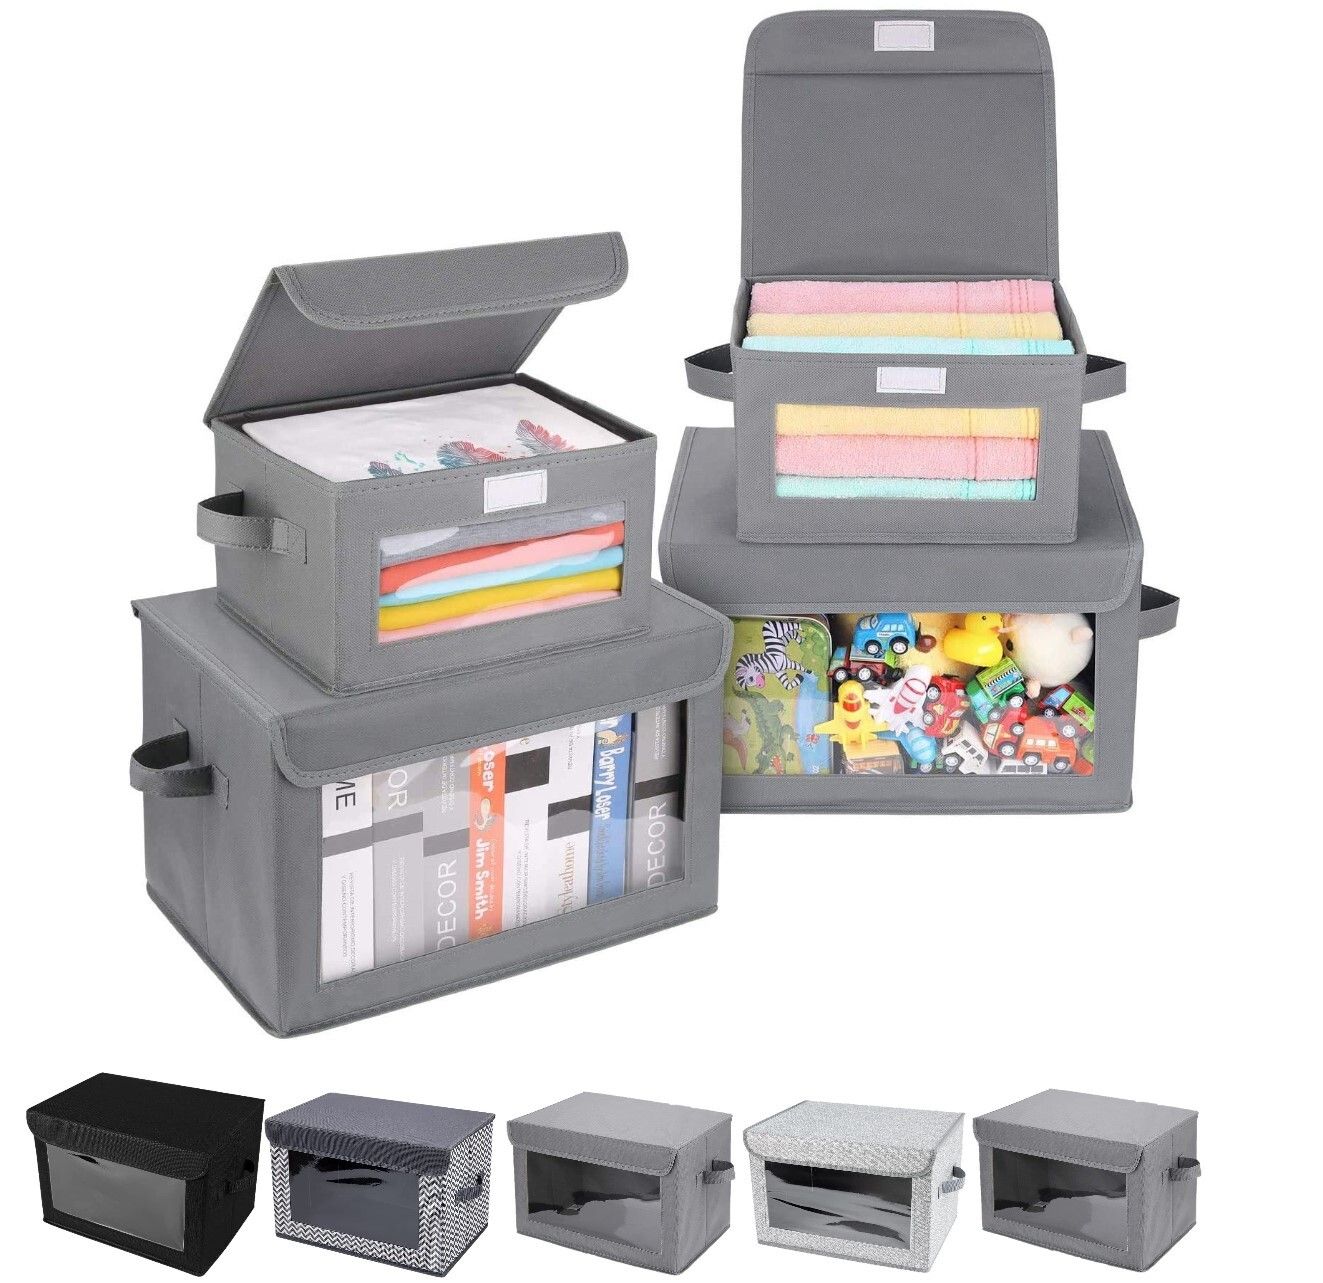 DIMJ Storage Bins with Lids, Collapsible Storage Toy Bins for Kids, 4 Pack Fabric Storage Boxs wi... | Walmart (US)